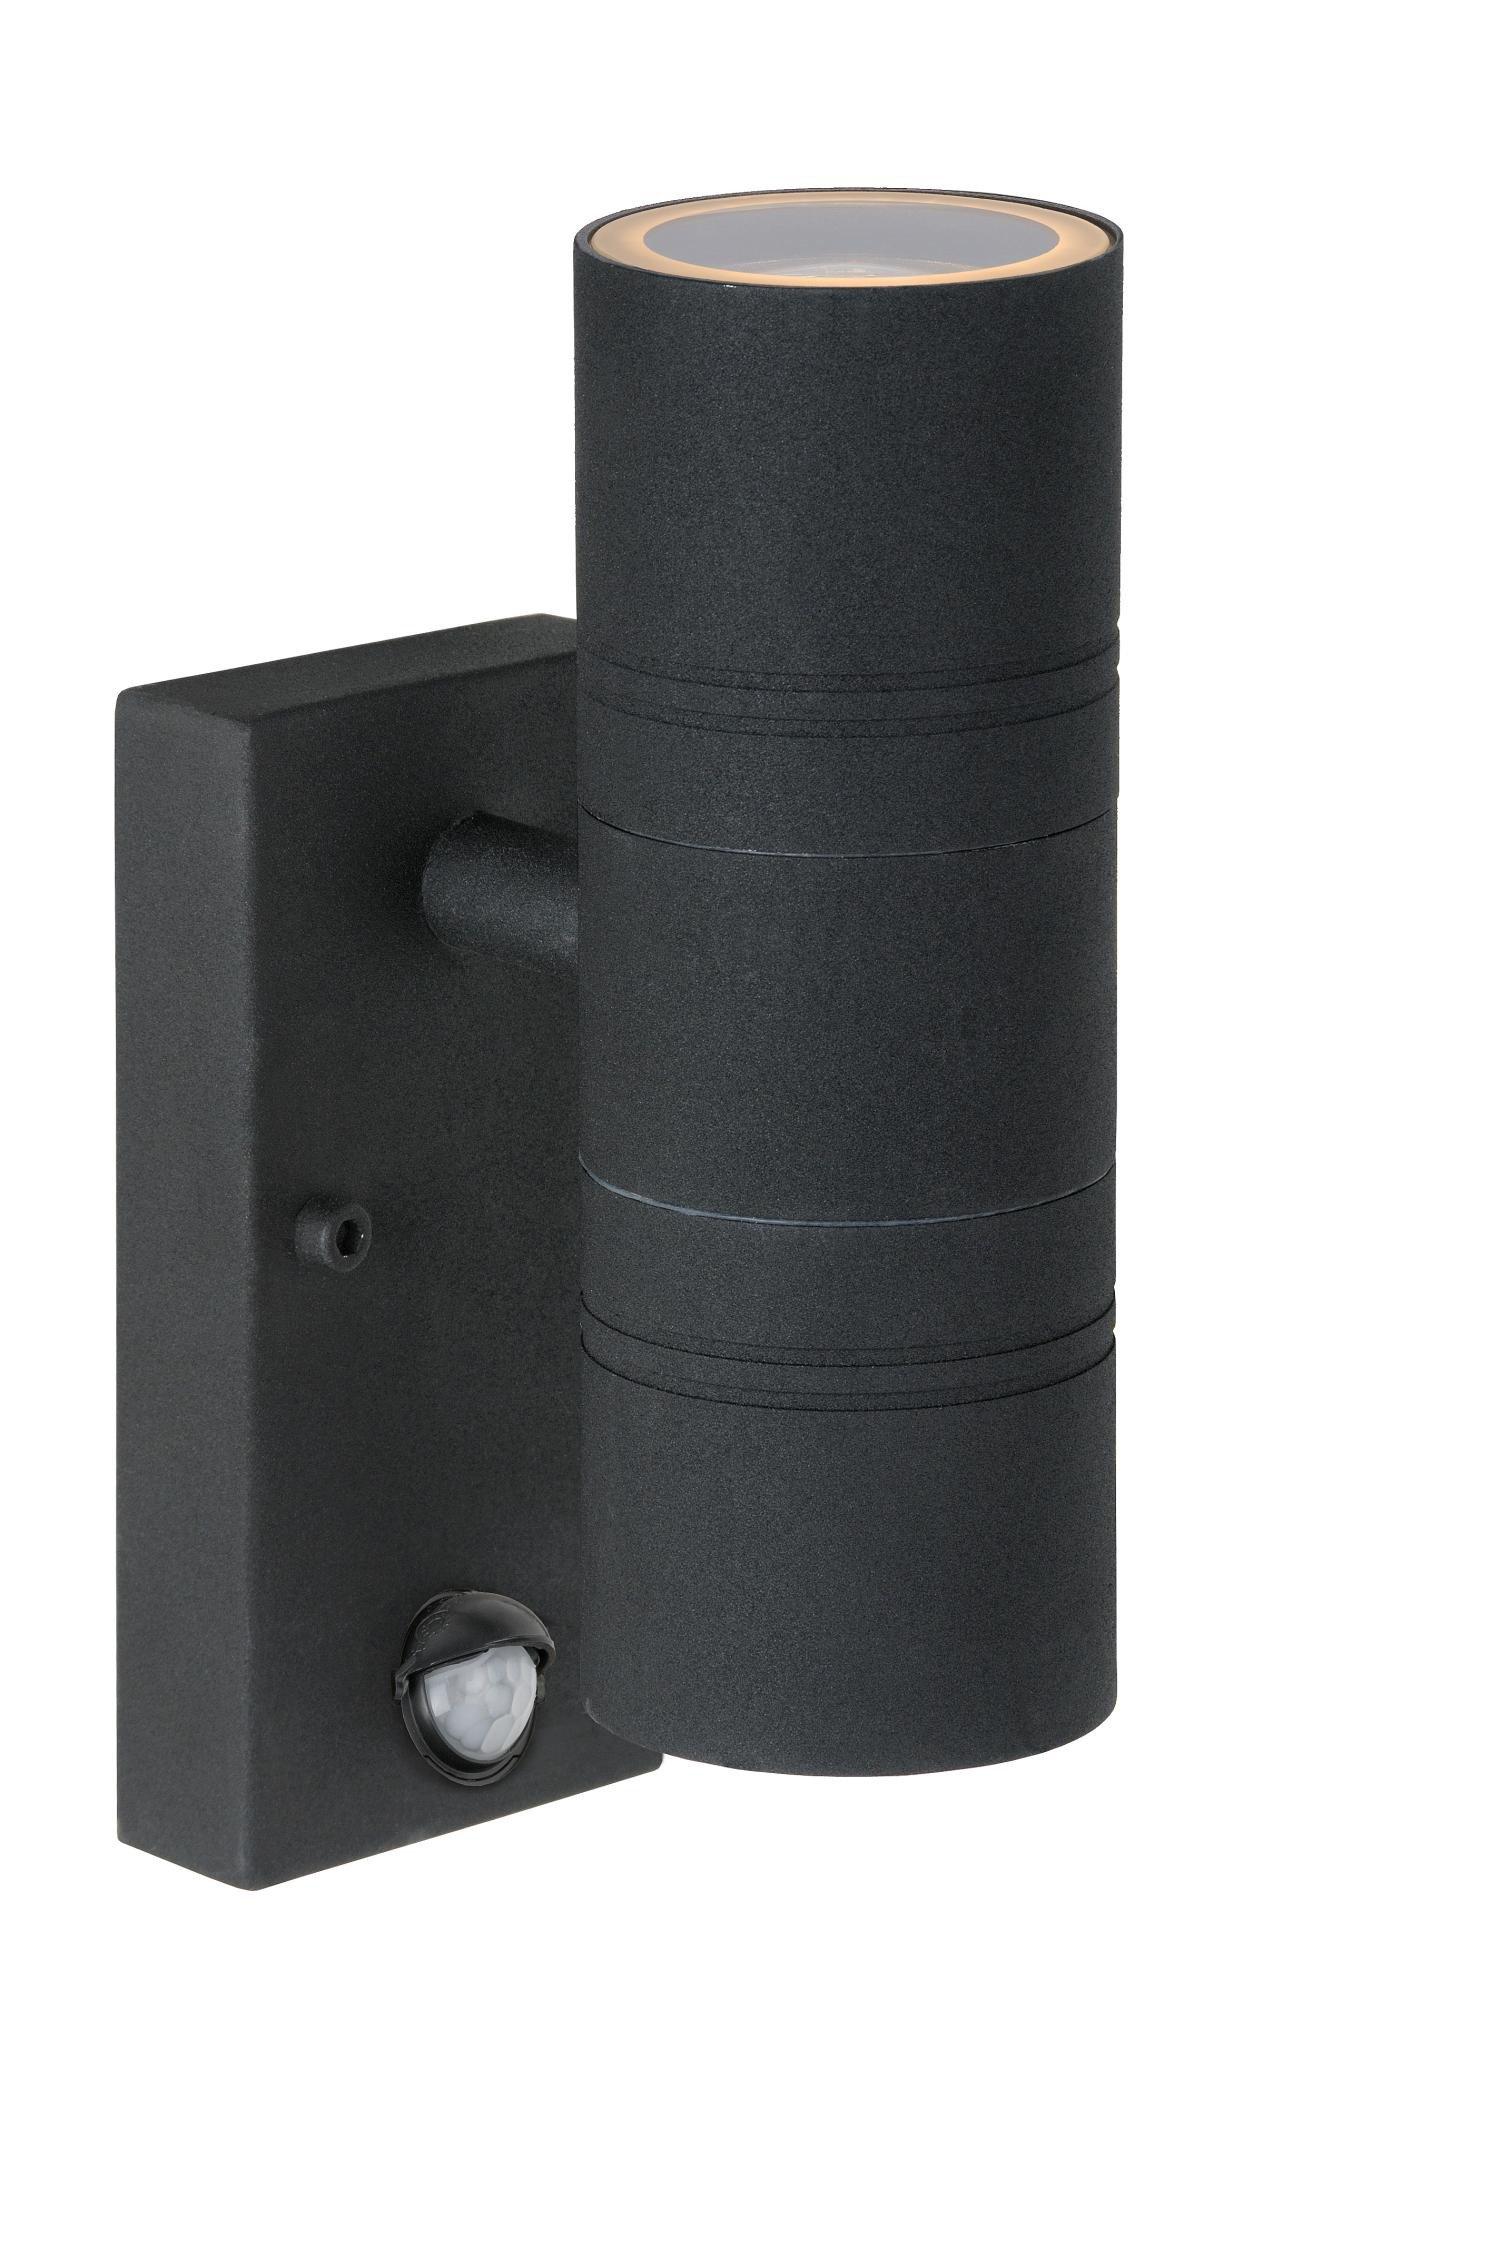 Lucide ArneLed Modern Up Down Wall Spotlight Outdoor PIR Sensor 63cm LED GU10 2x5W 2700K IP44 Black